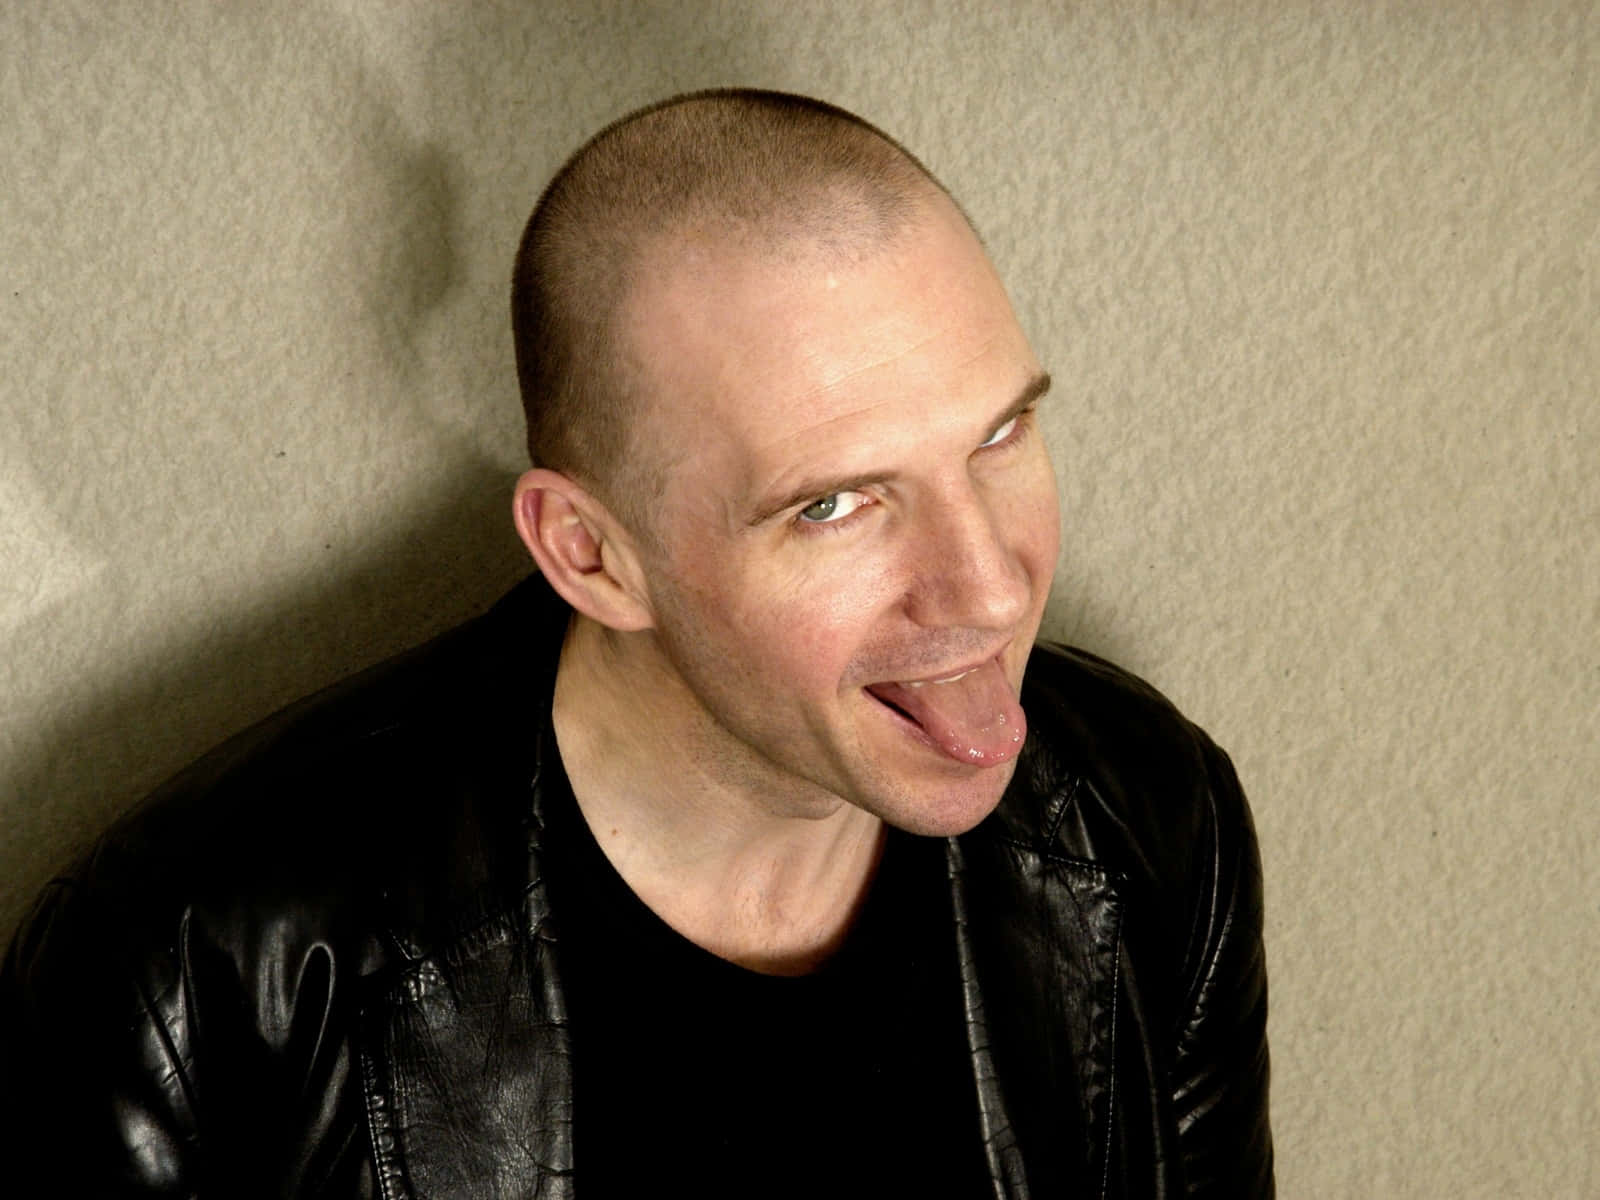 Bald Man Sticking Out Tongue Wallpaper